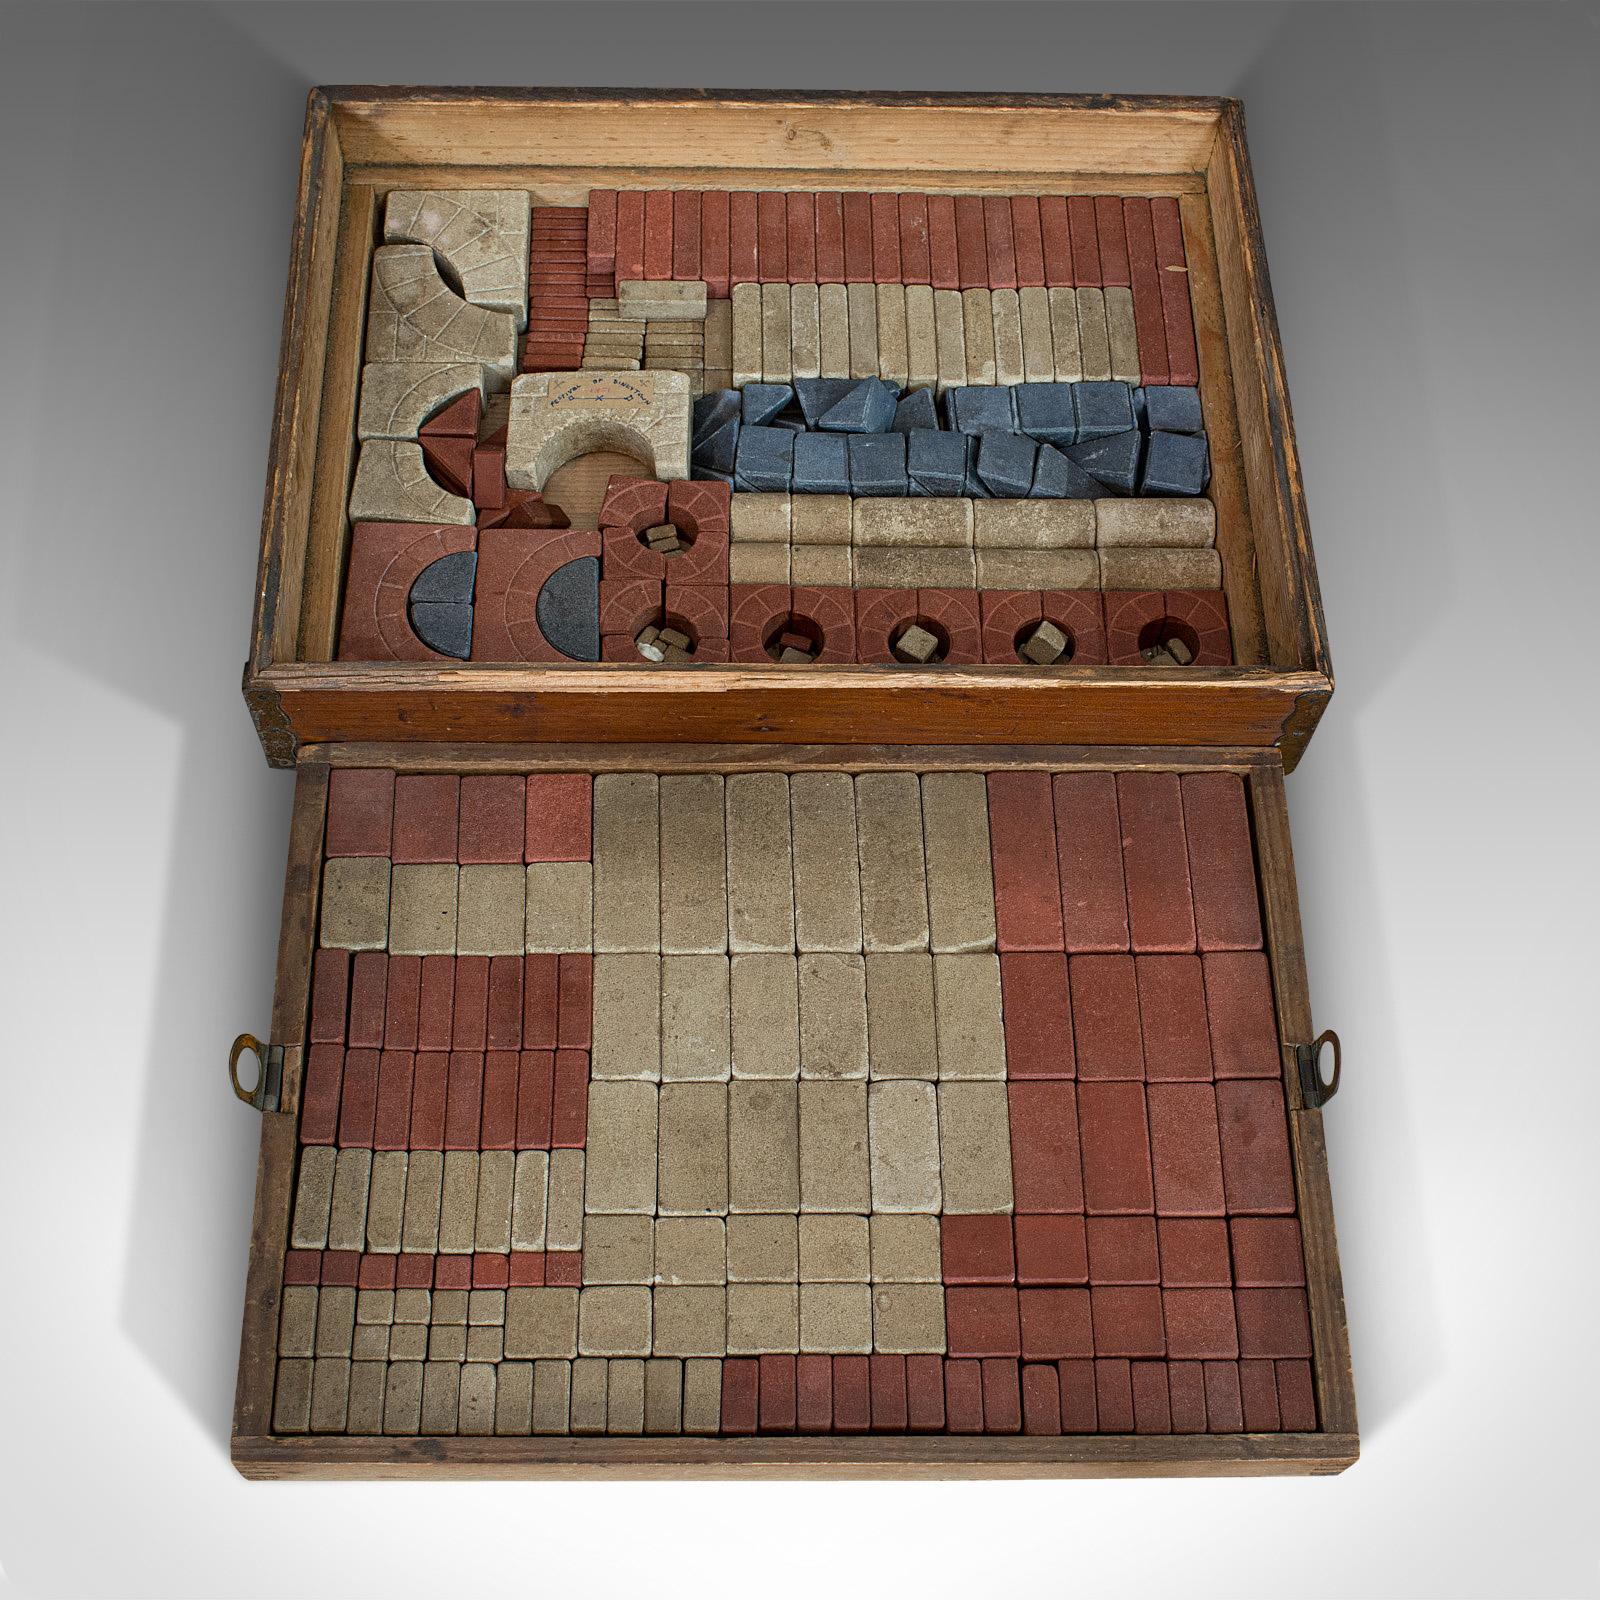 Albanian Antique Richter's Anchor Box, German, Stone, Anker Baukasten, Number 15, Set For Sale